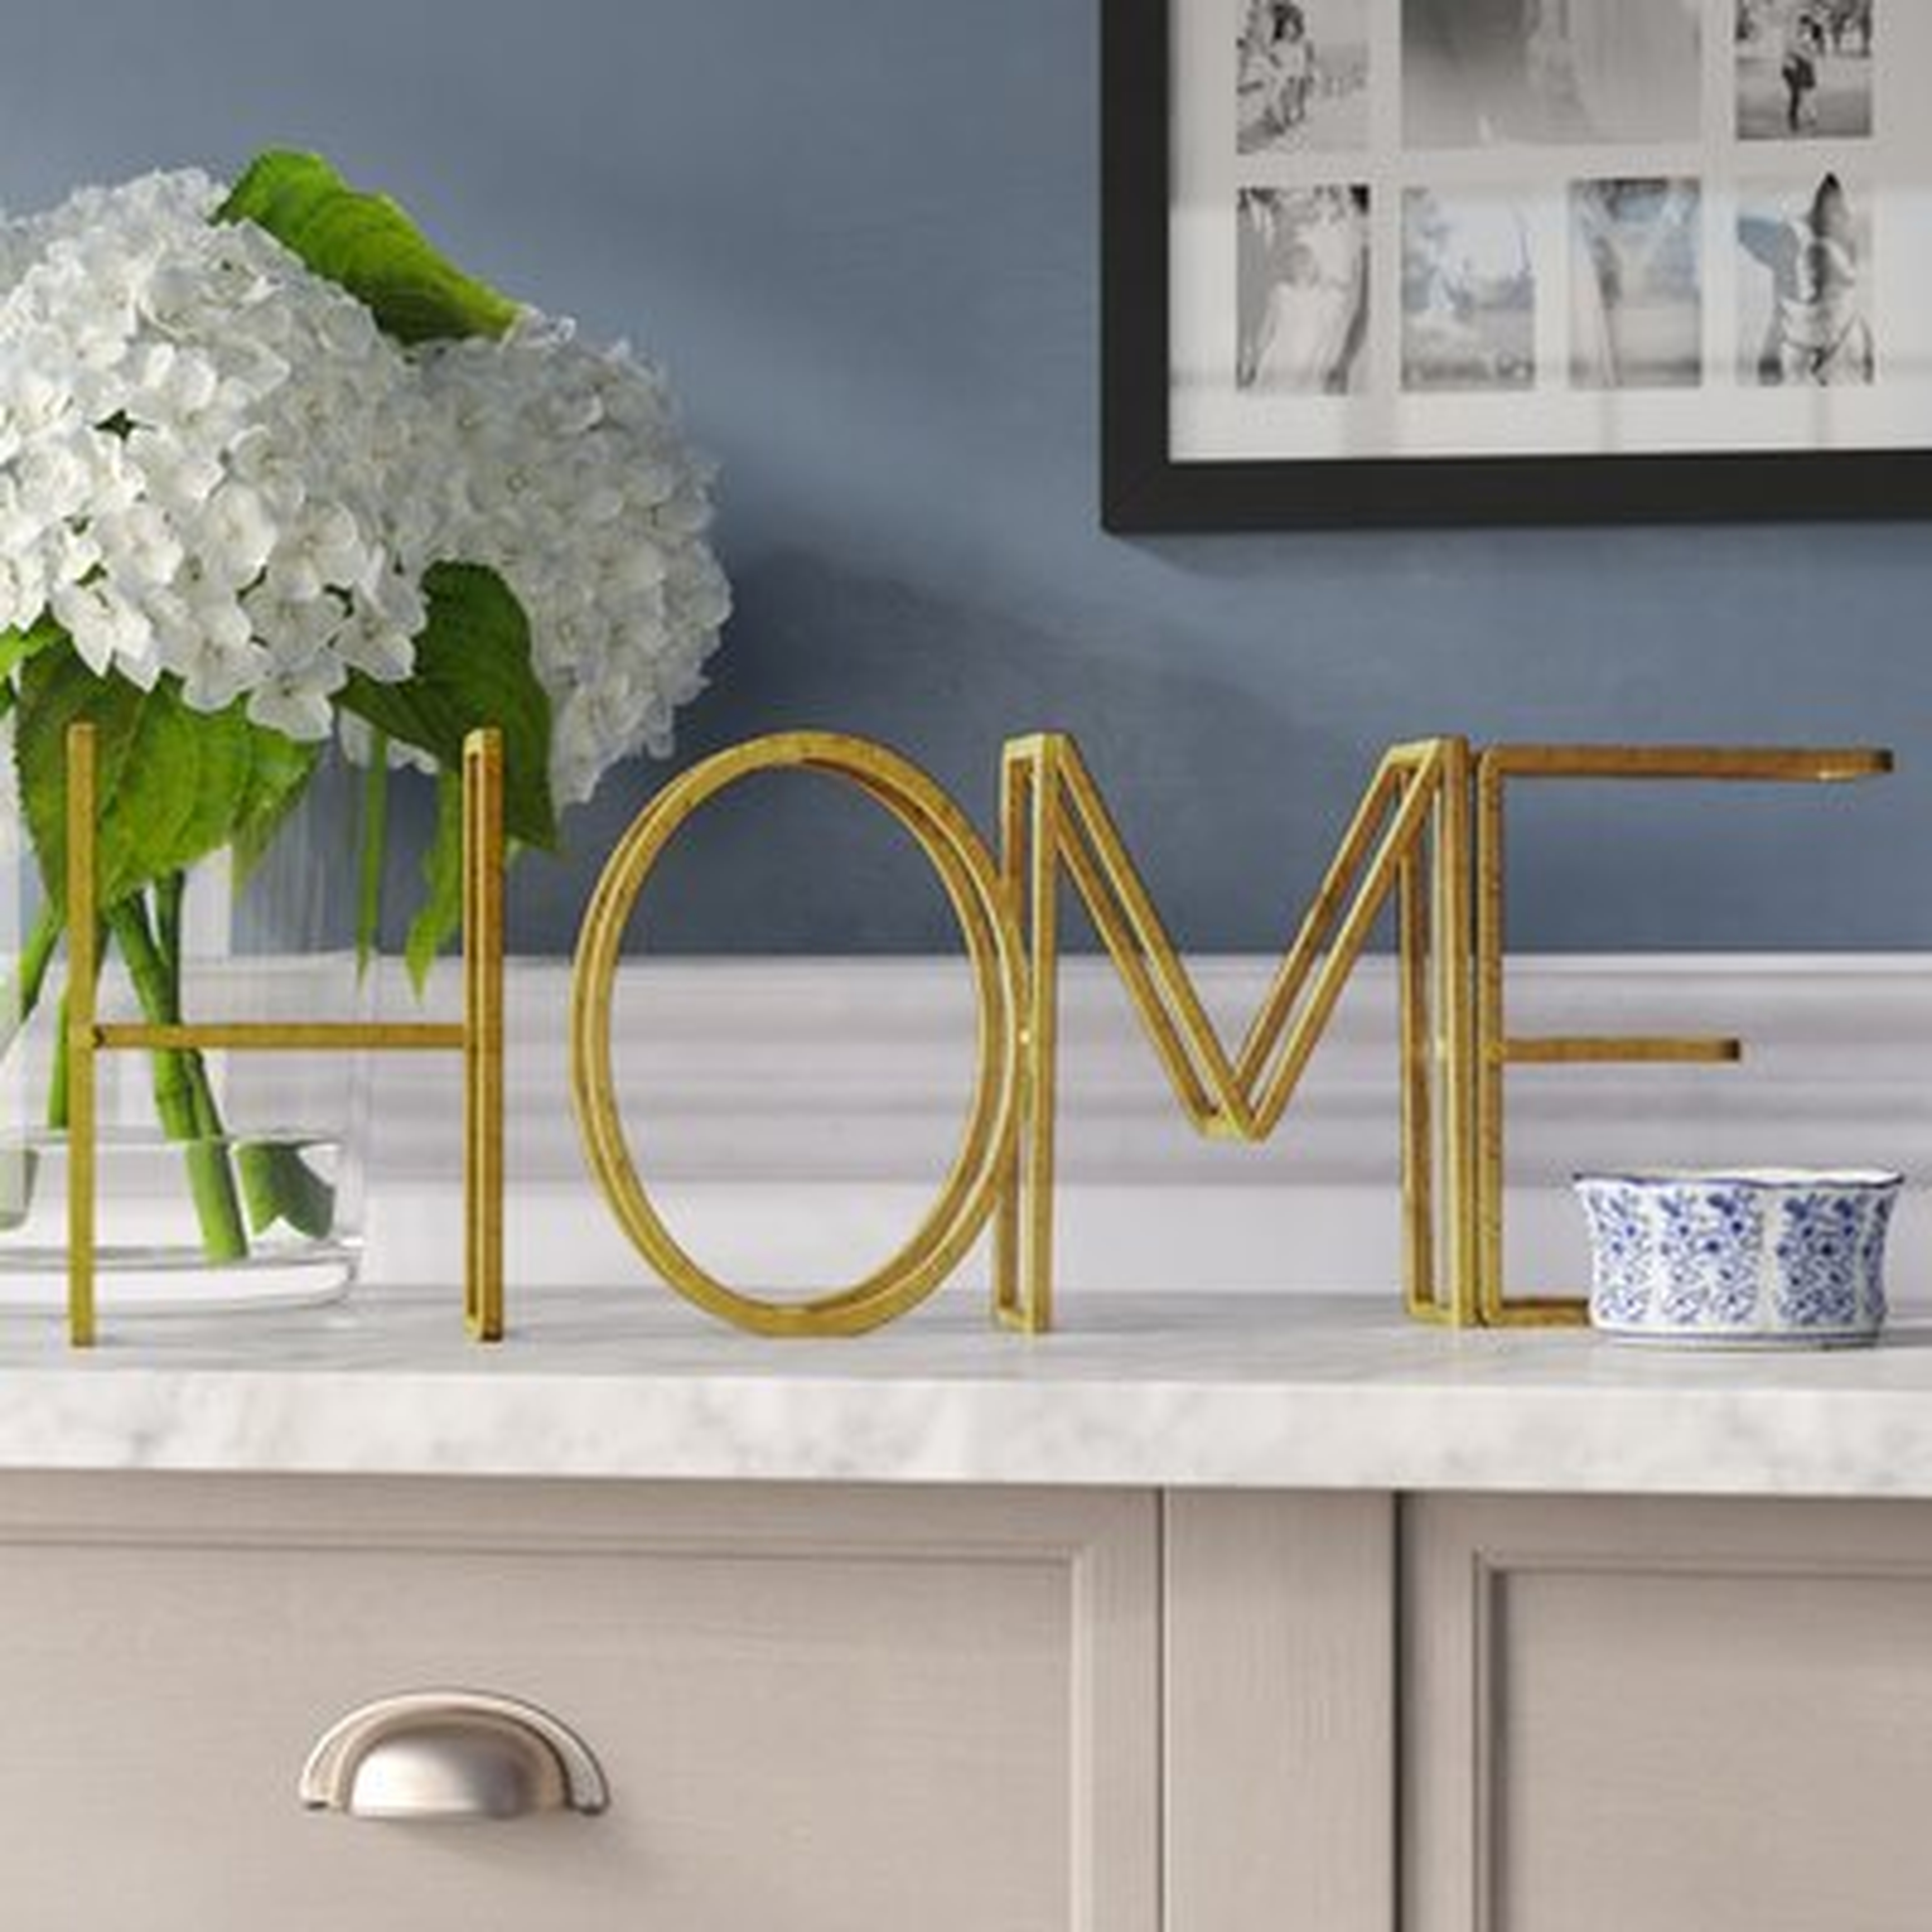 Tullis "Home" Free-Standing Decorative Table Top Sign - Wayfair